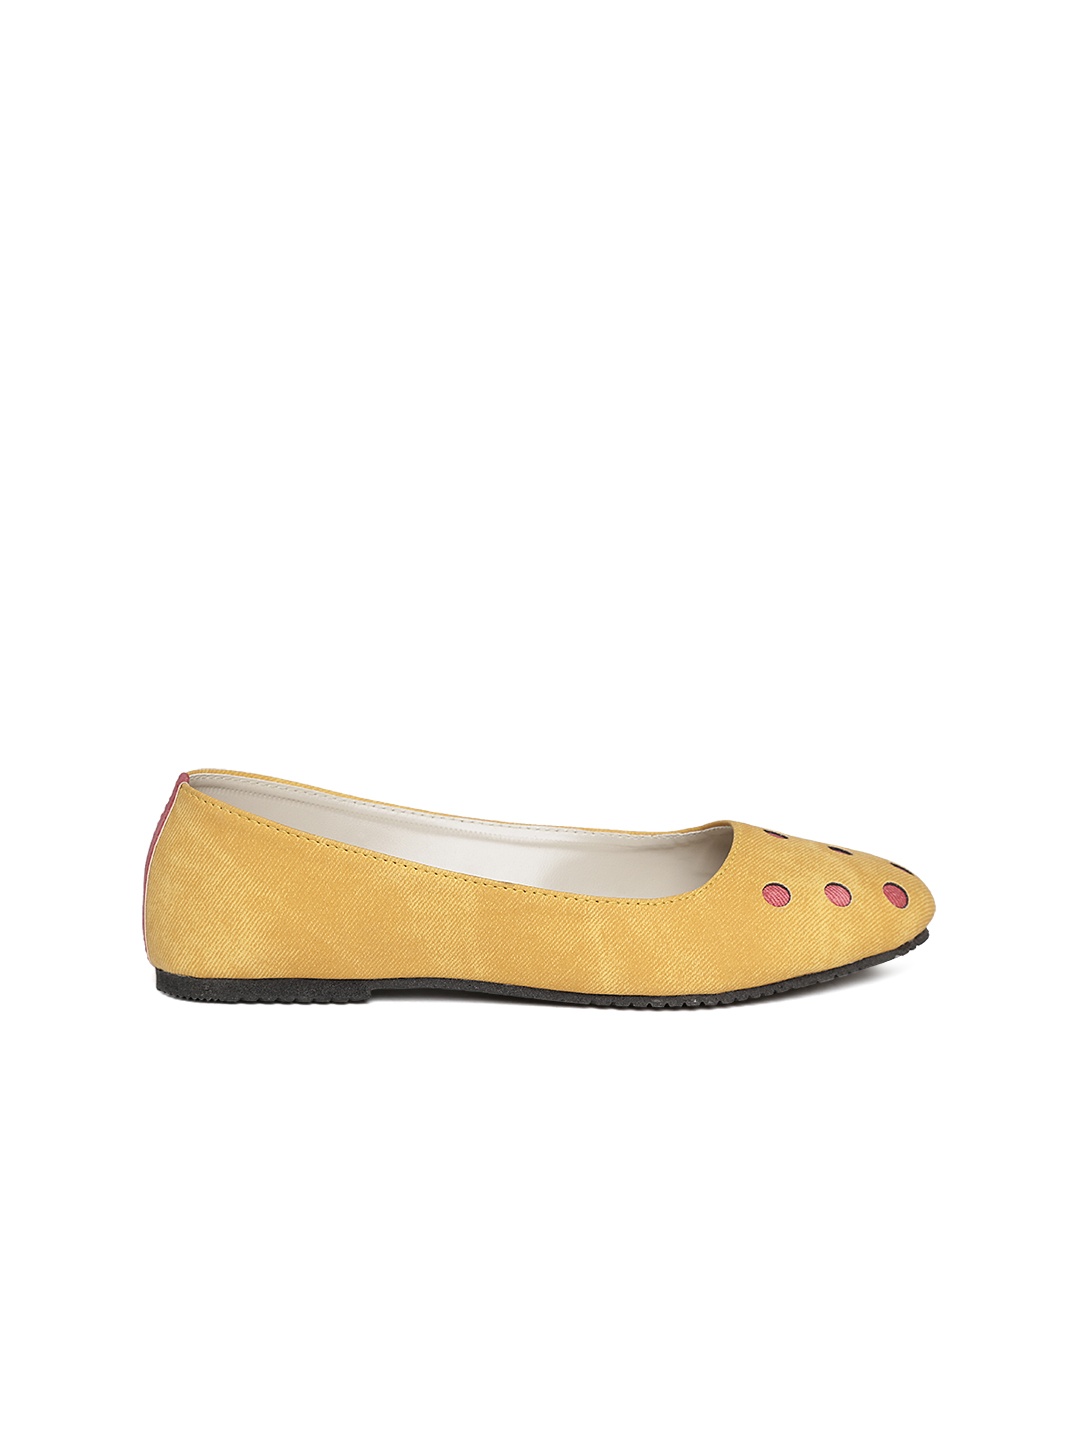 Myntra EXOTICA Women Mustard Yellow Flat Shoes 658133 | Buy Myntra ...